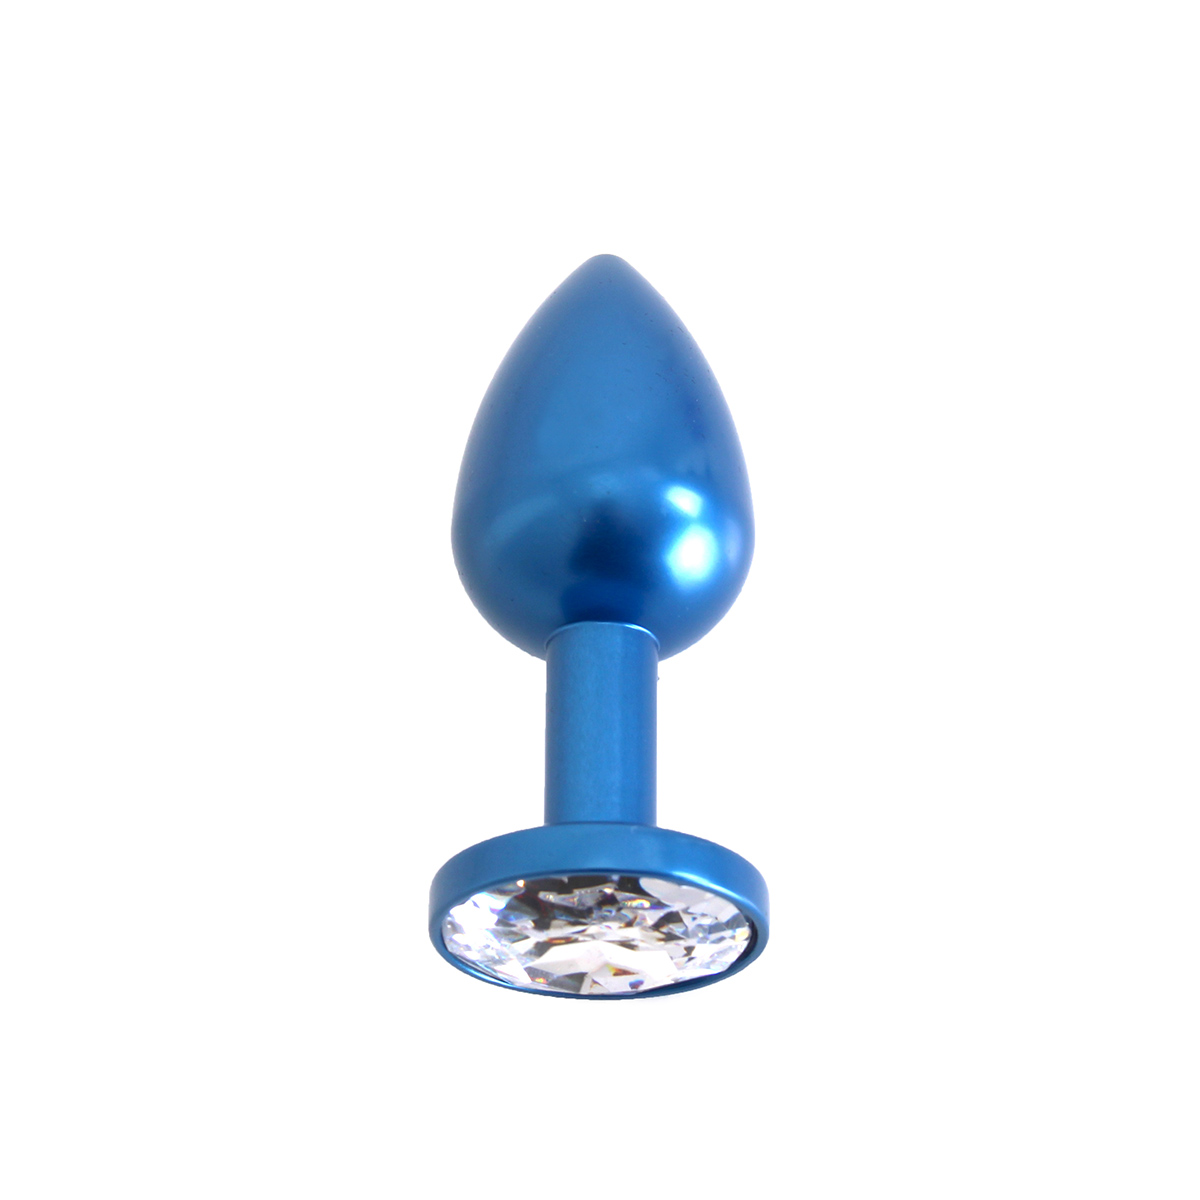 Aluminium-Buttplug-Blue-with-Clear-Gem-OPR-2820034-1